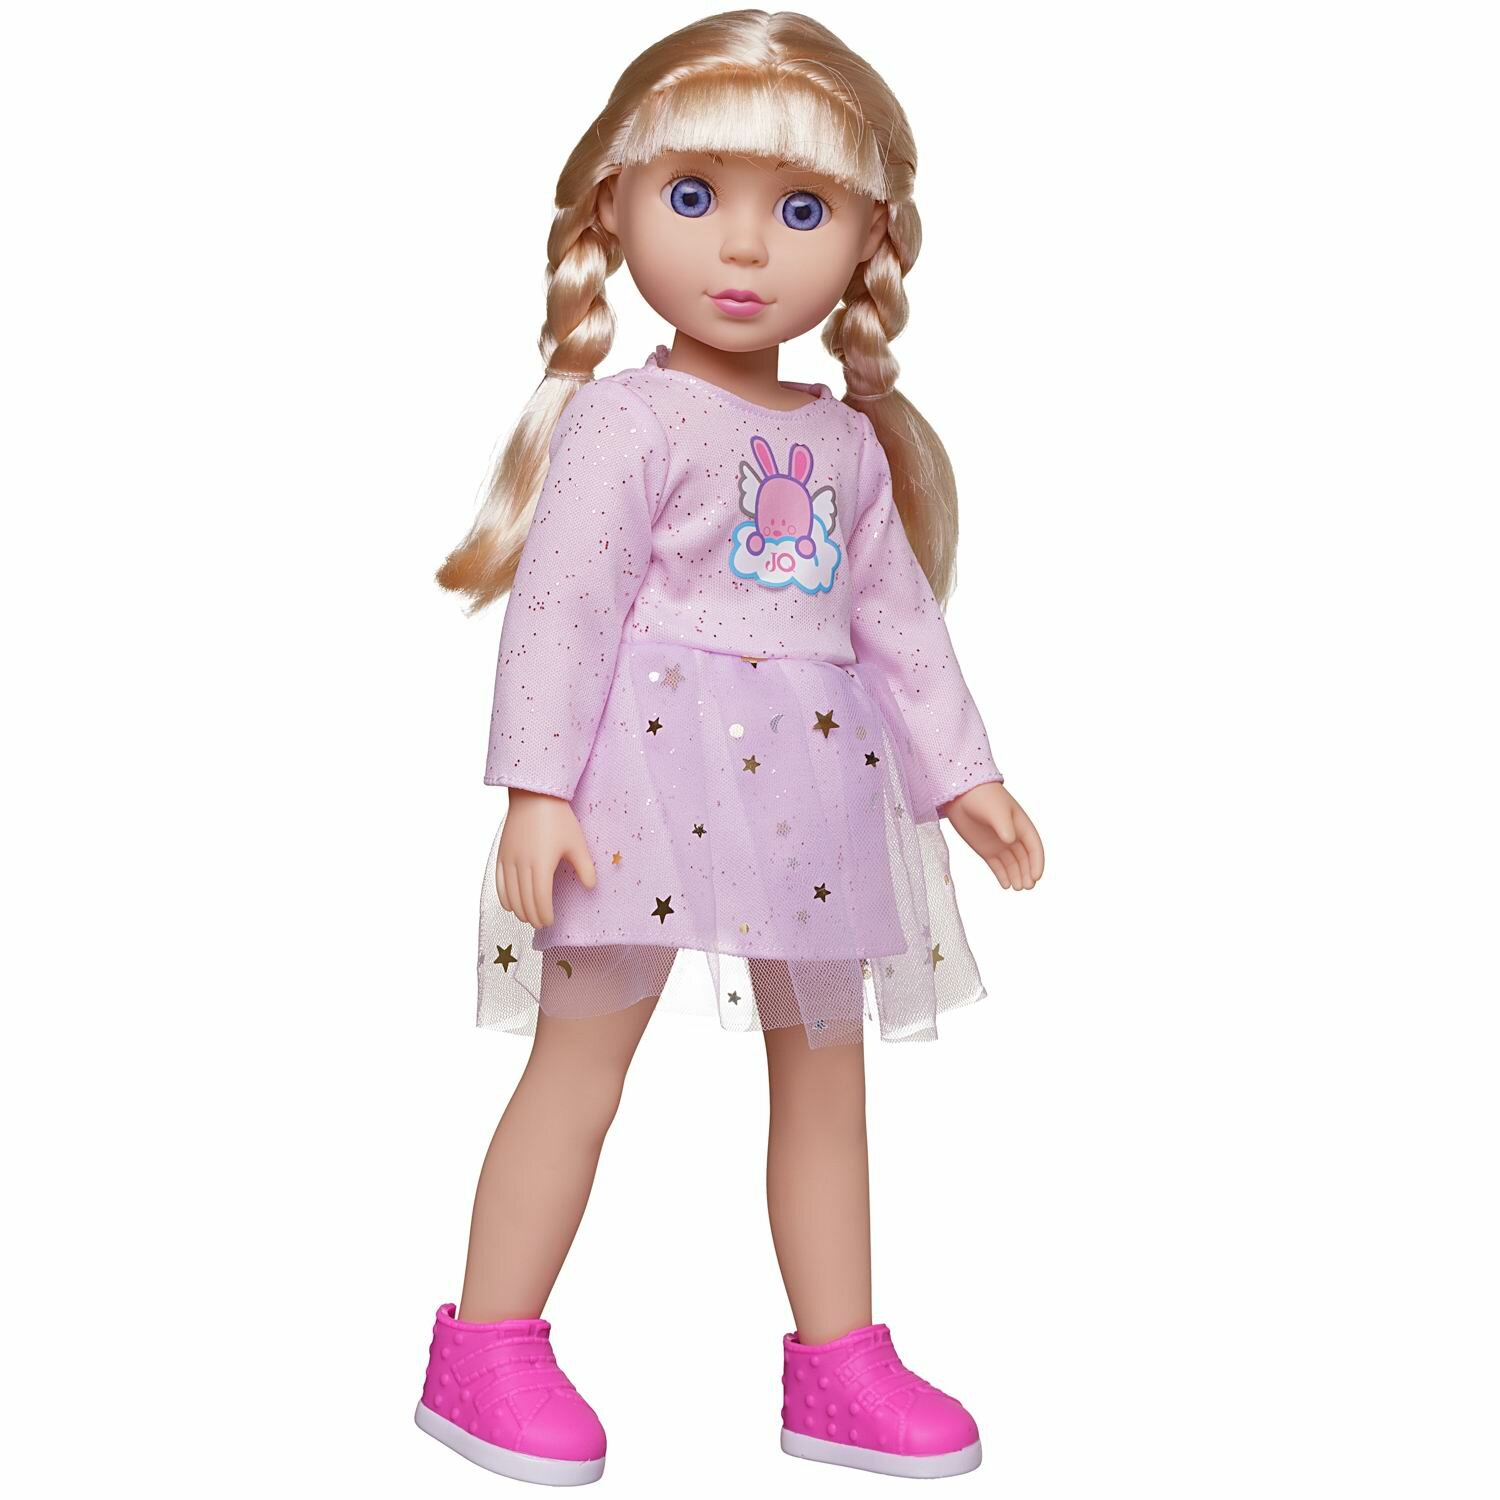 Кукла в бледно-розовом платье 36 см WJ-37782